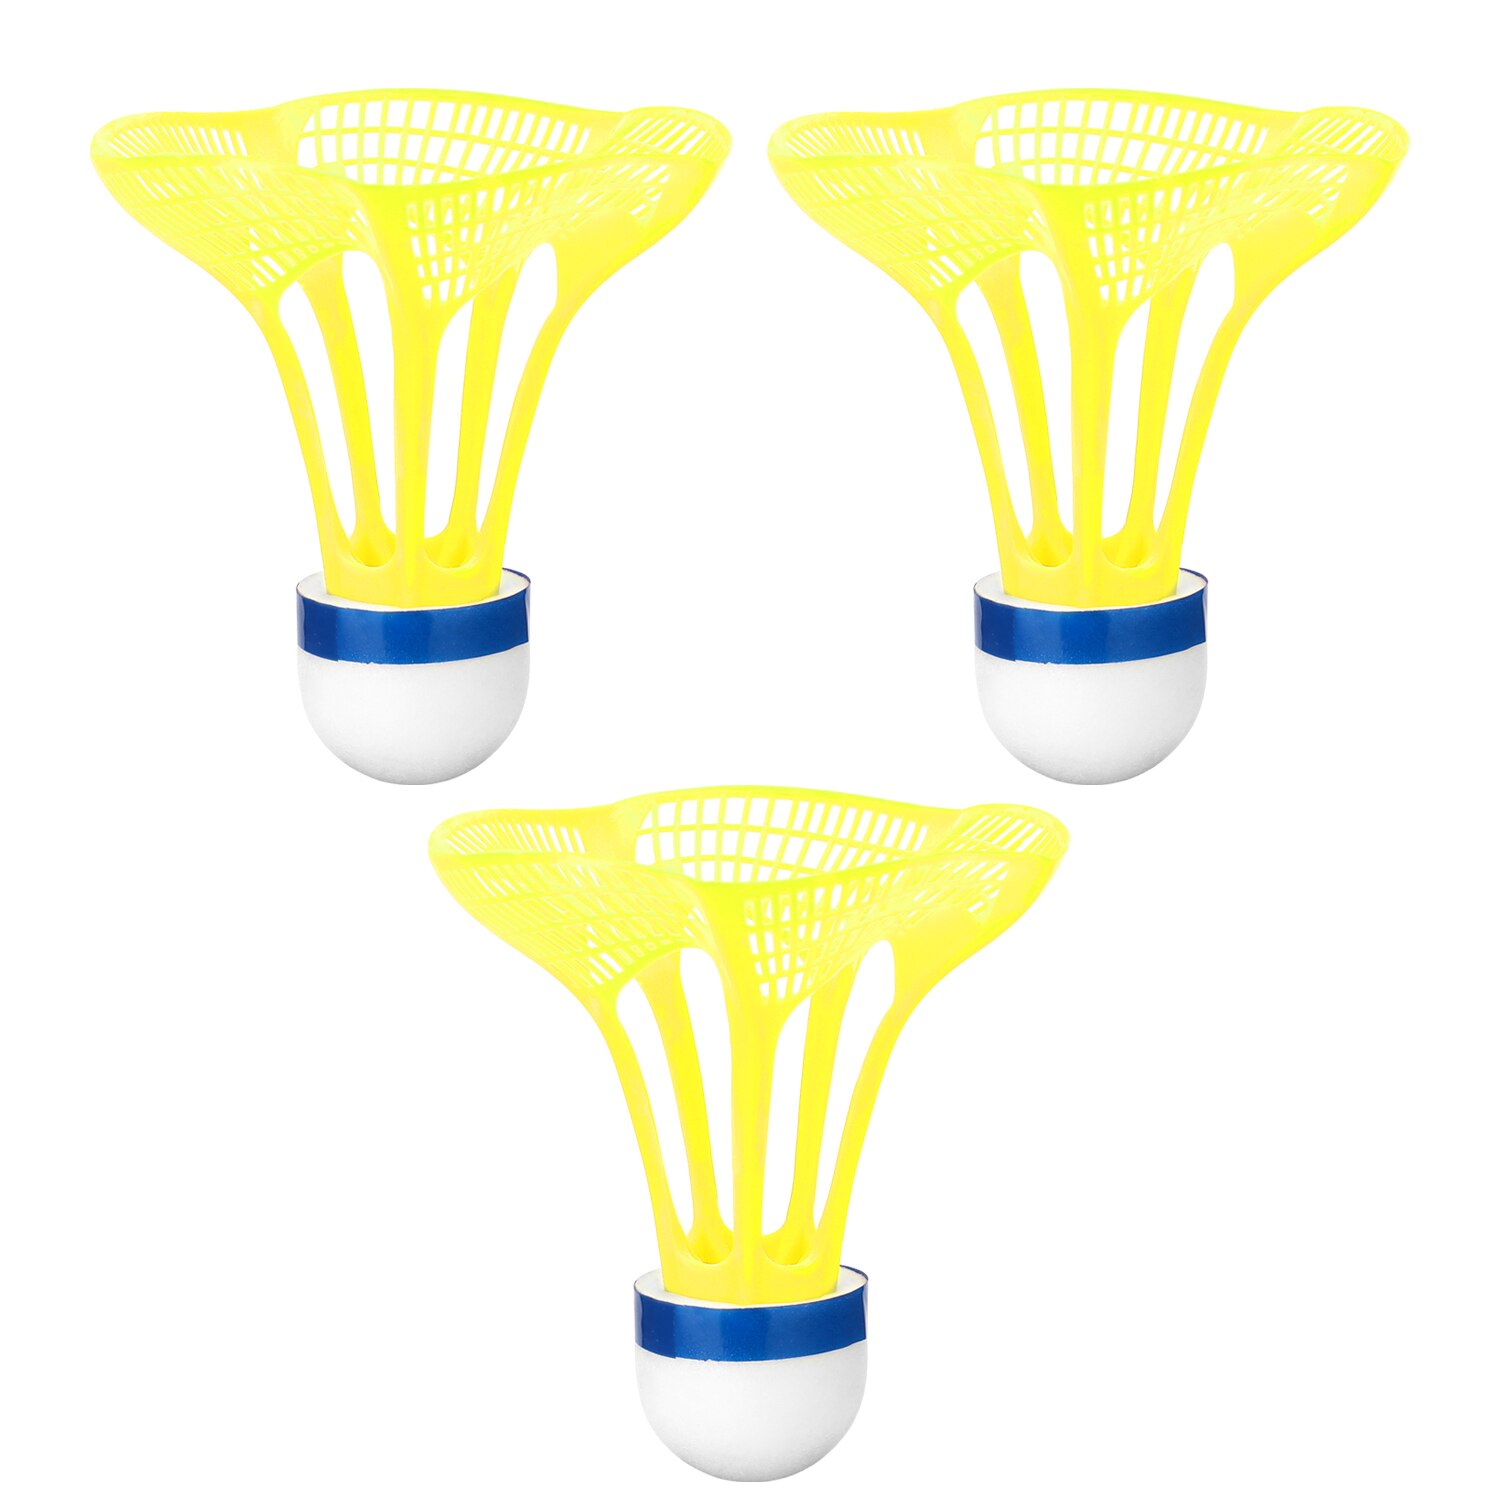 Originale airshuttle udendørs badminton airshuttle plastkugle nylon fjerball kugle stabil modstand 3 stk / pakke: Lysegul